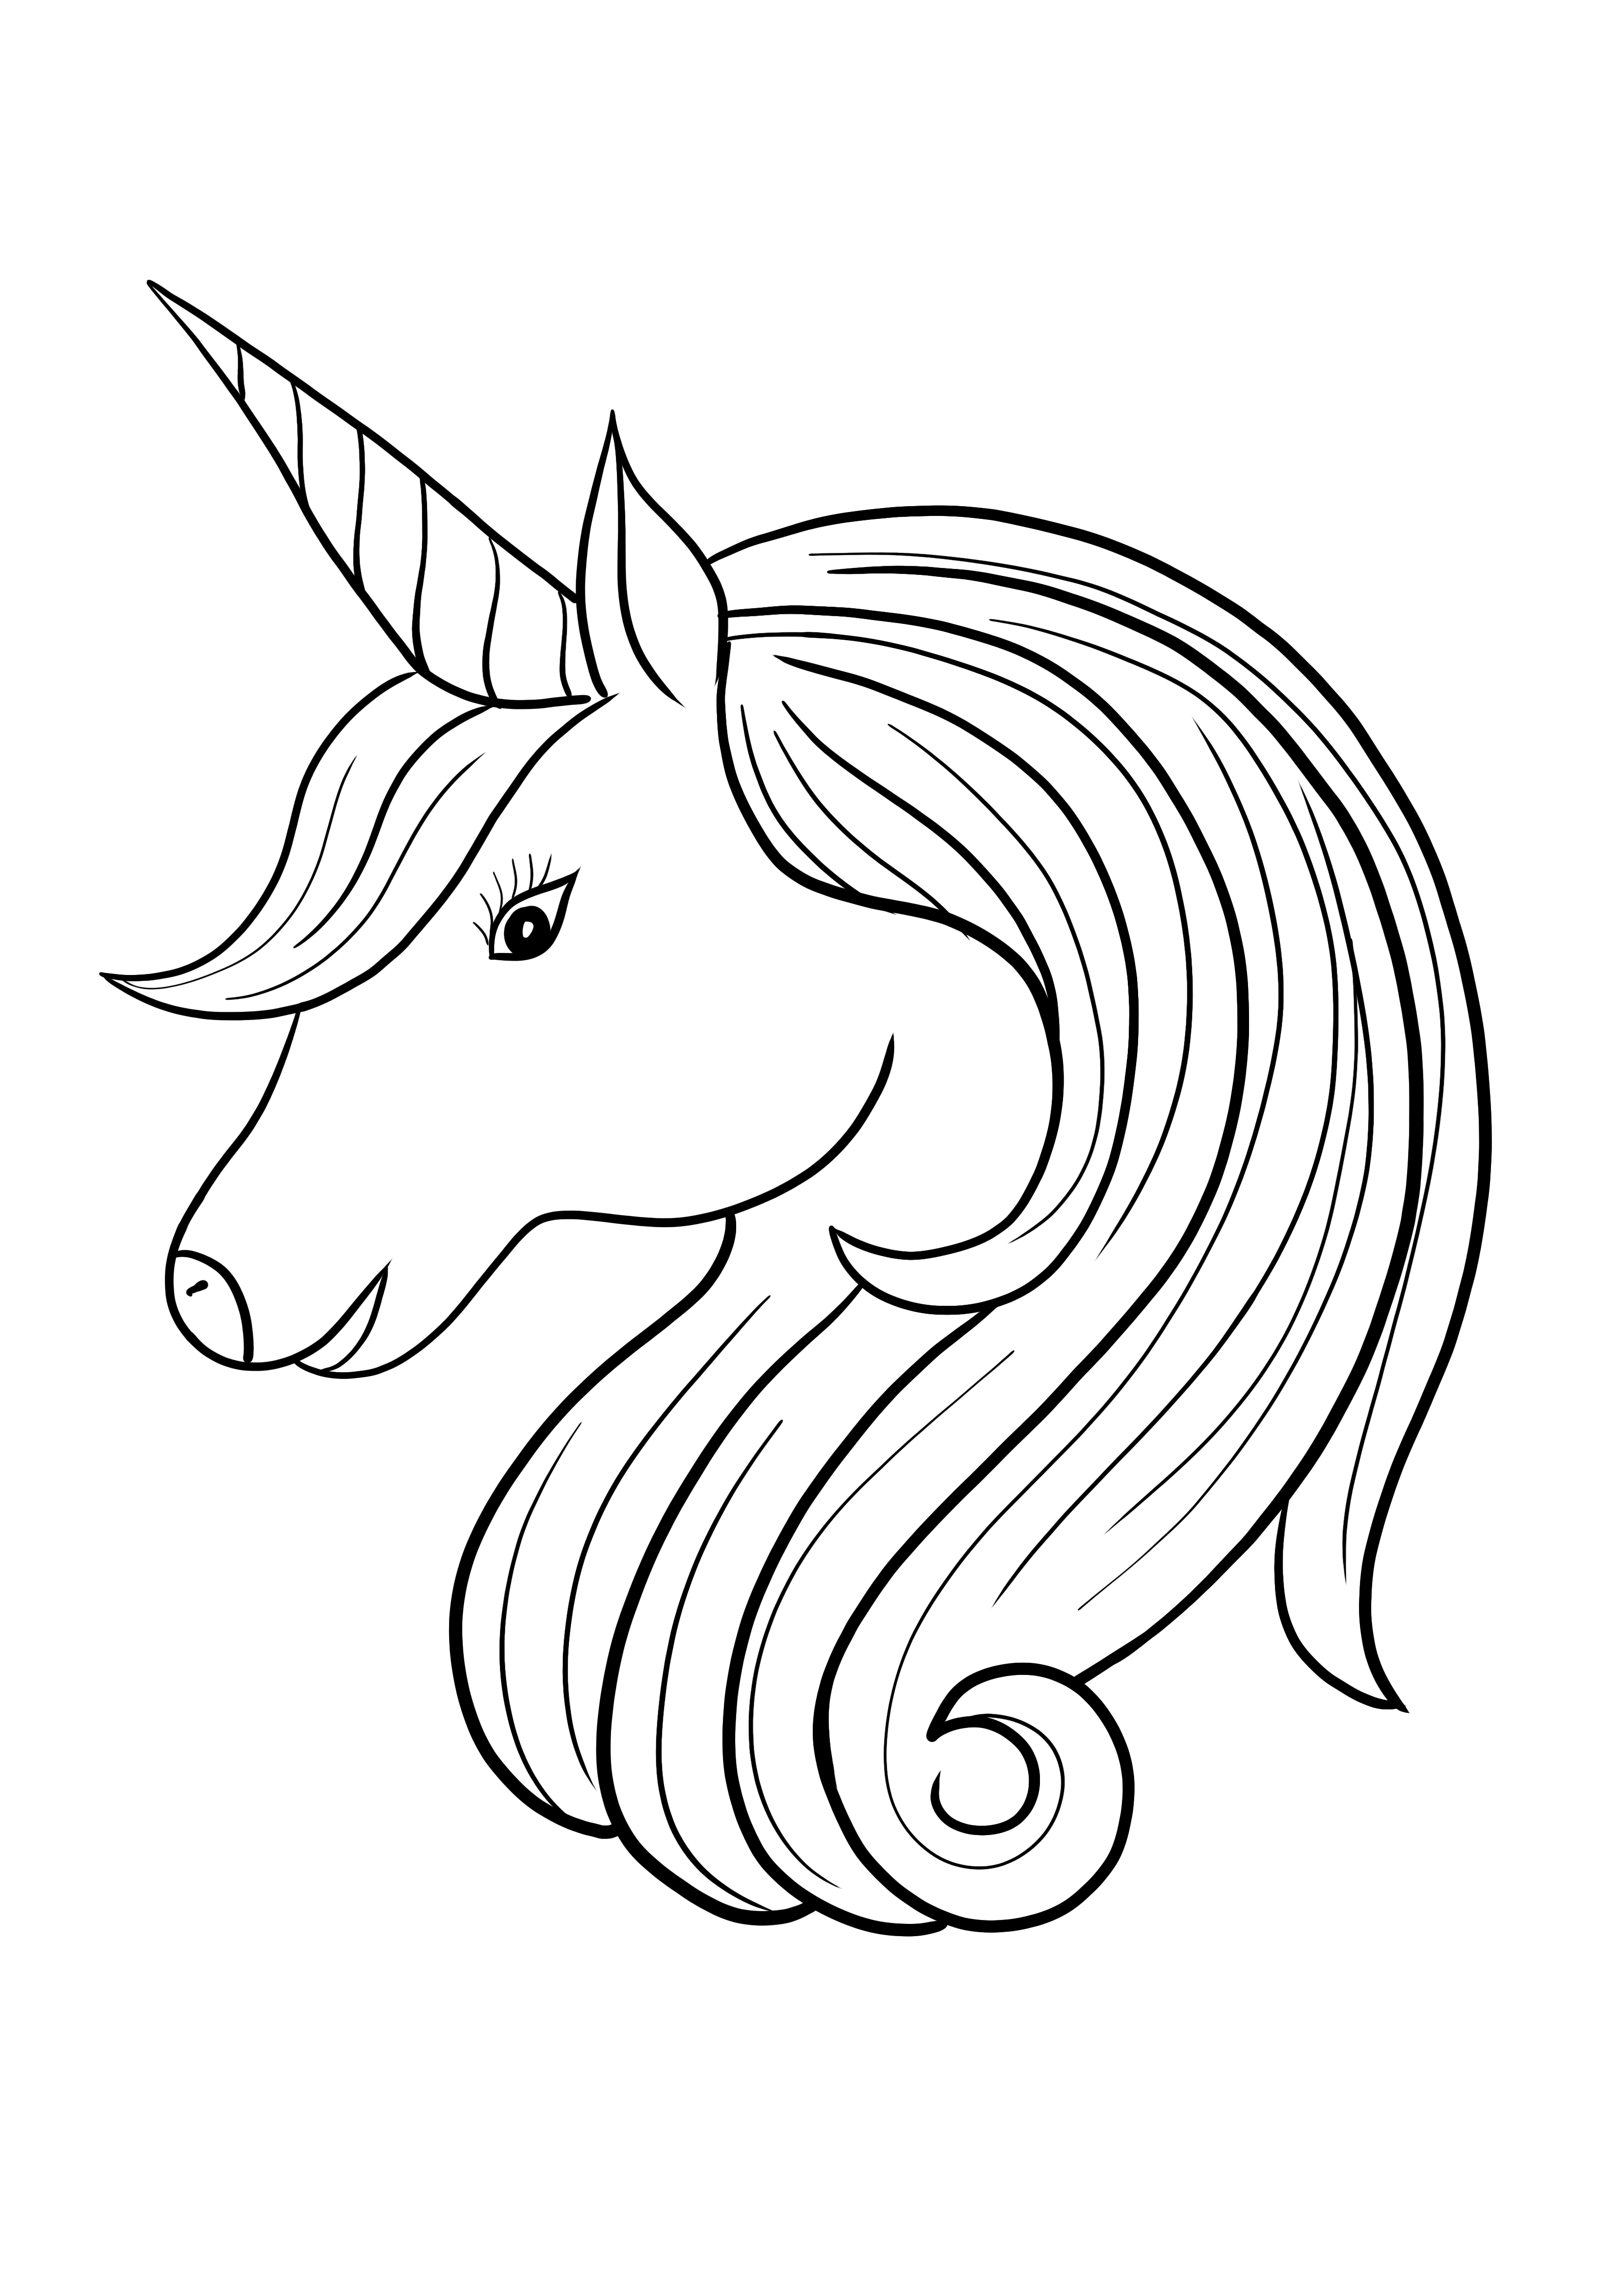 Unicorn head download